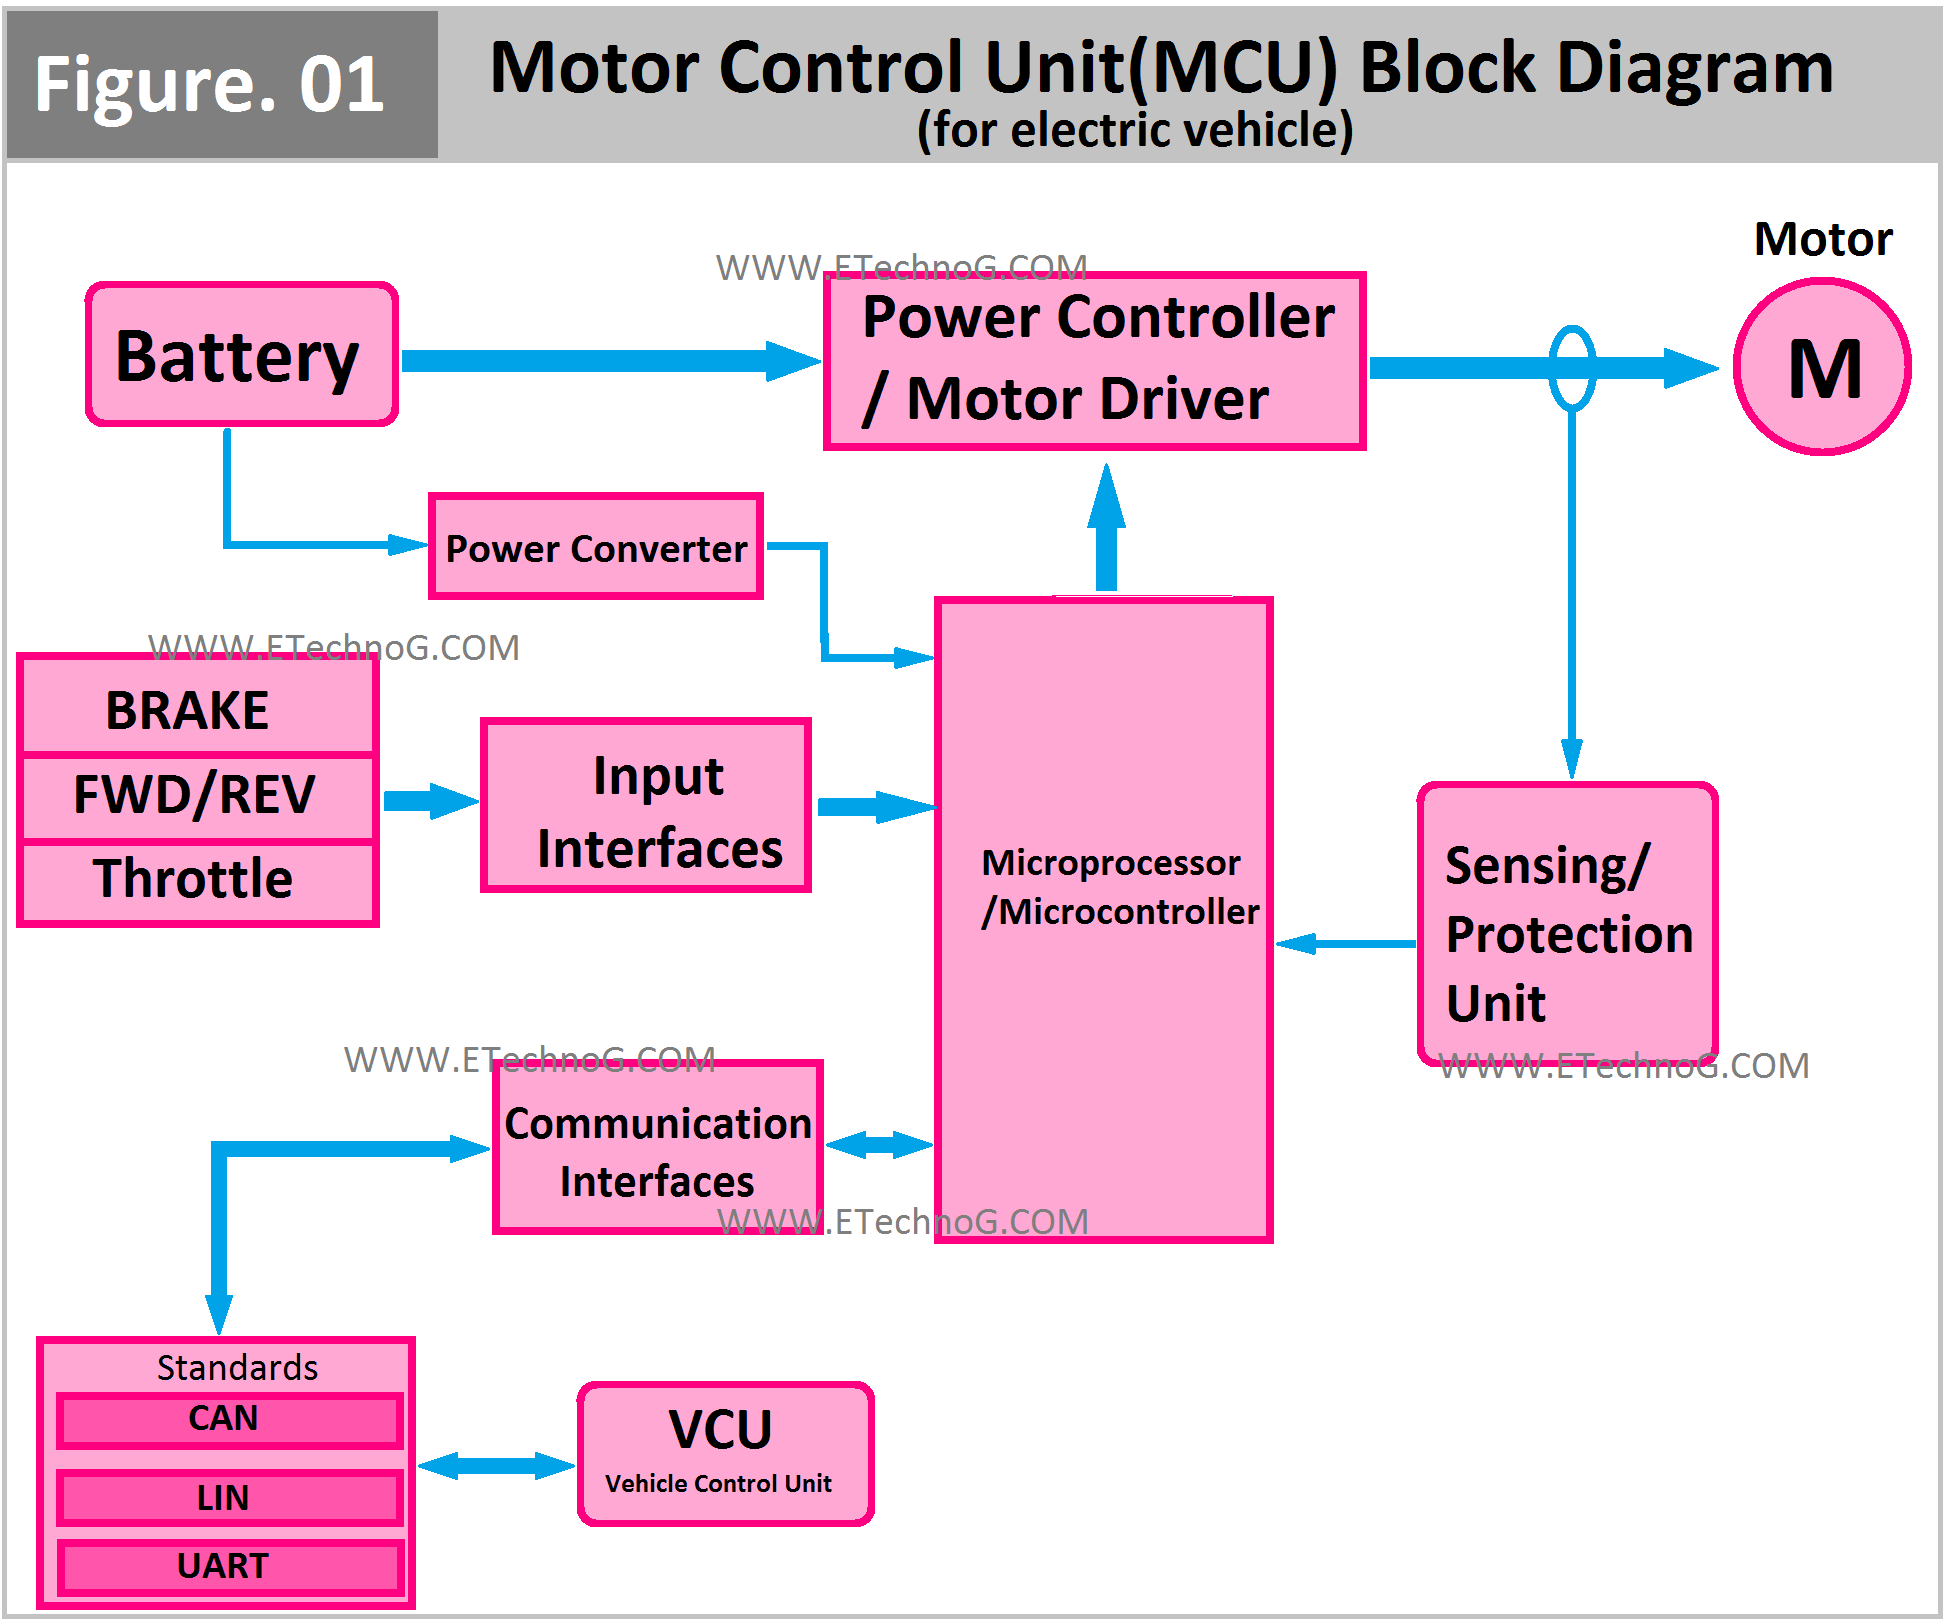 How MCU(Motor Control Unit) Works in Electric Vehicle? Diagram ETechnoG